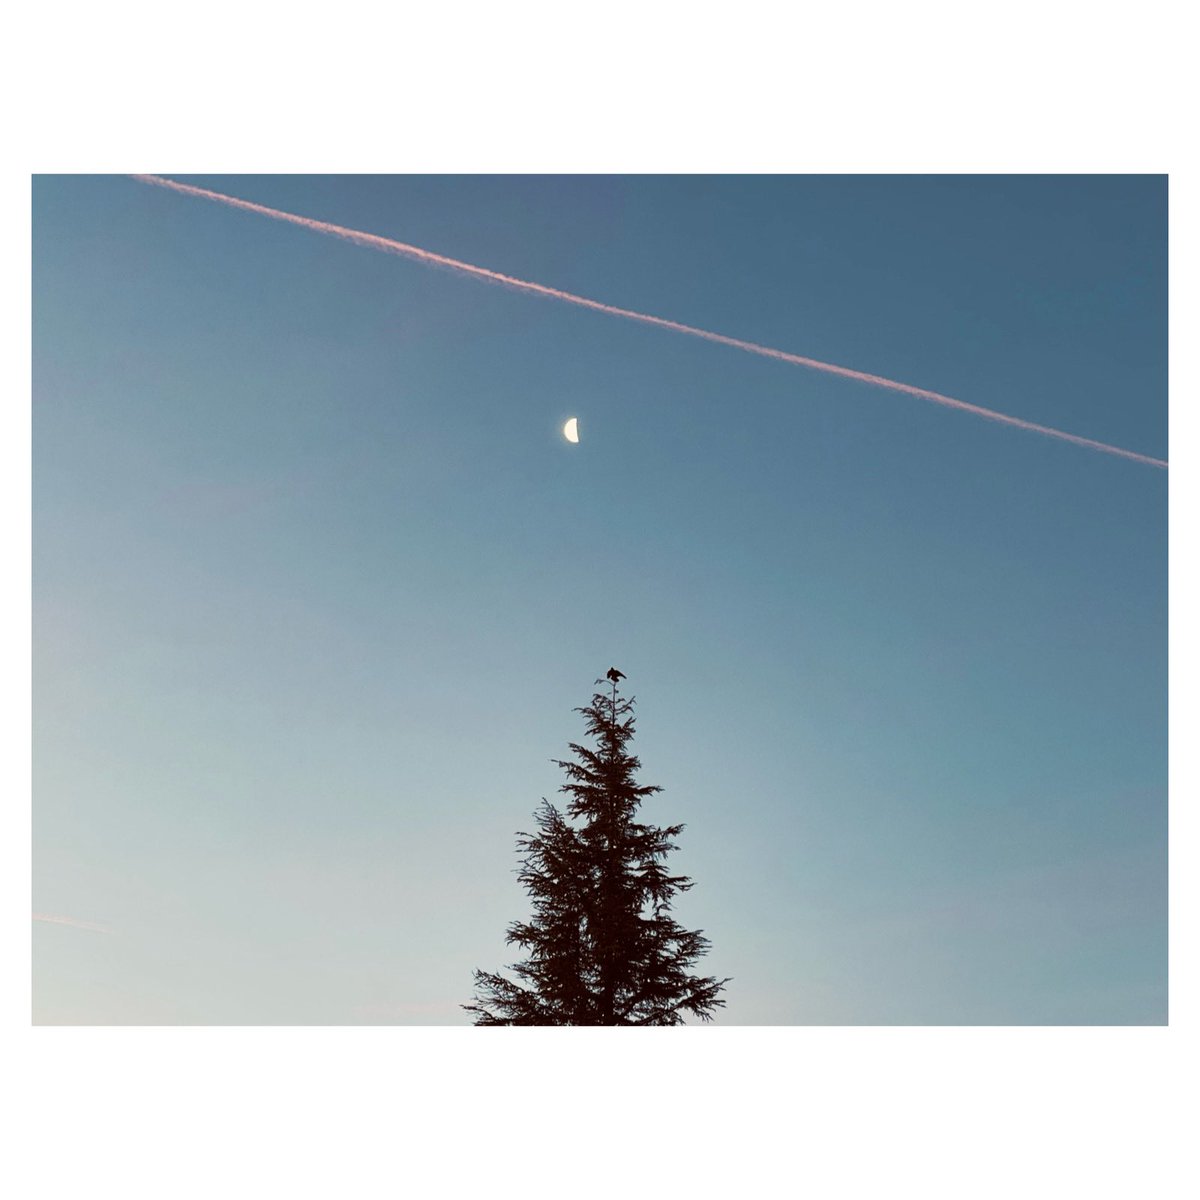 Home 

#morningview #minimalist #minimalism #igersfrance #skyphotography #skylovers #igersaixenprovence #moonphotography #puyricard #wipplay #grainedephotographe #birdsofinstagram #naturephotography